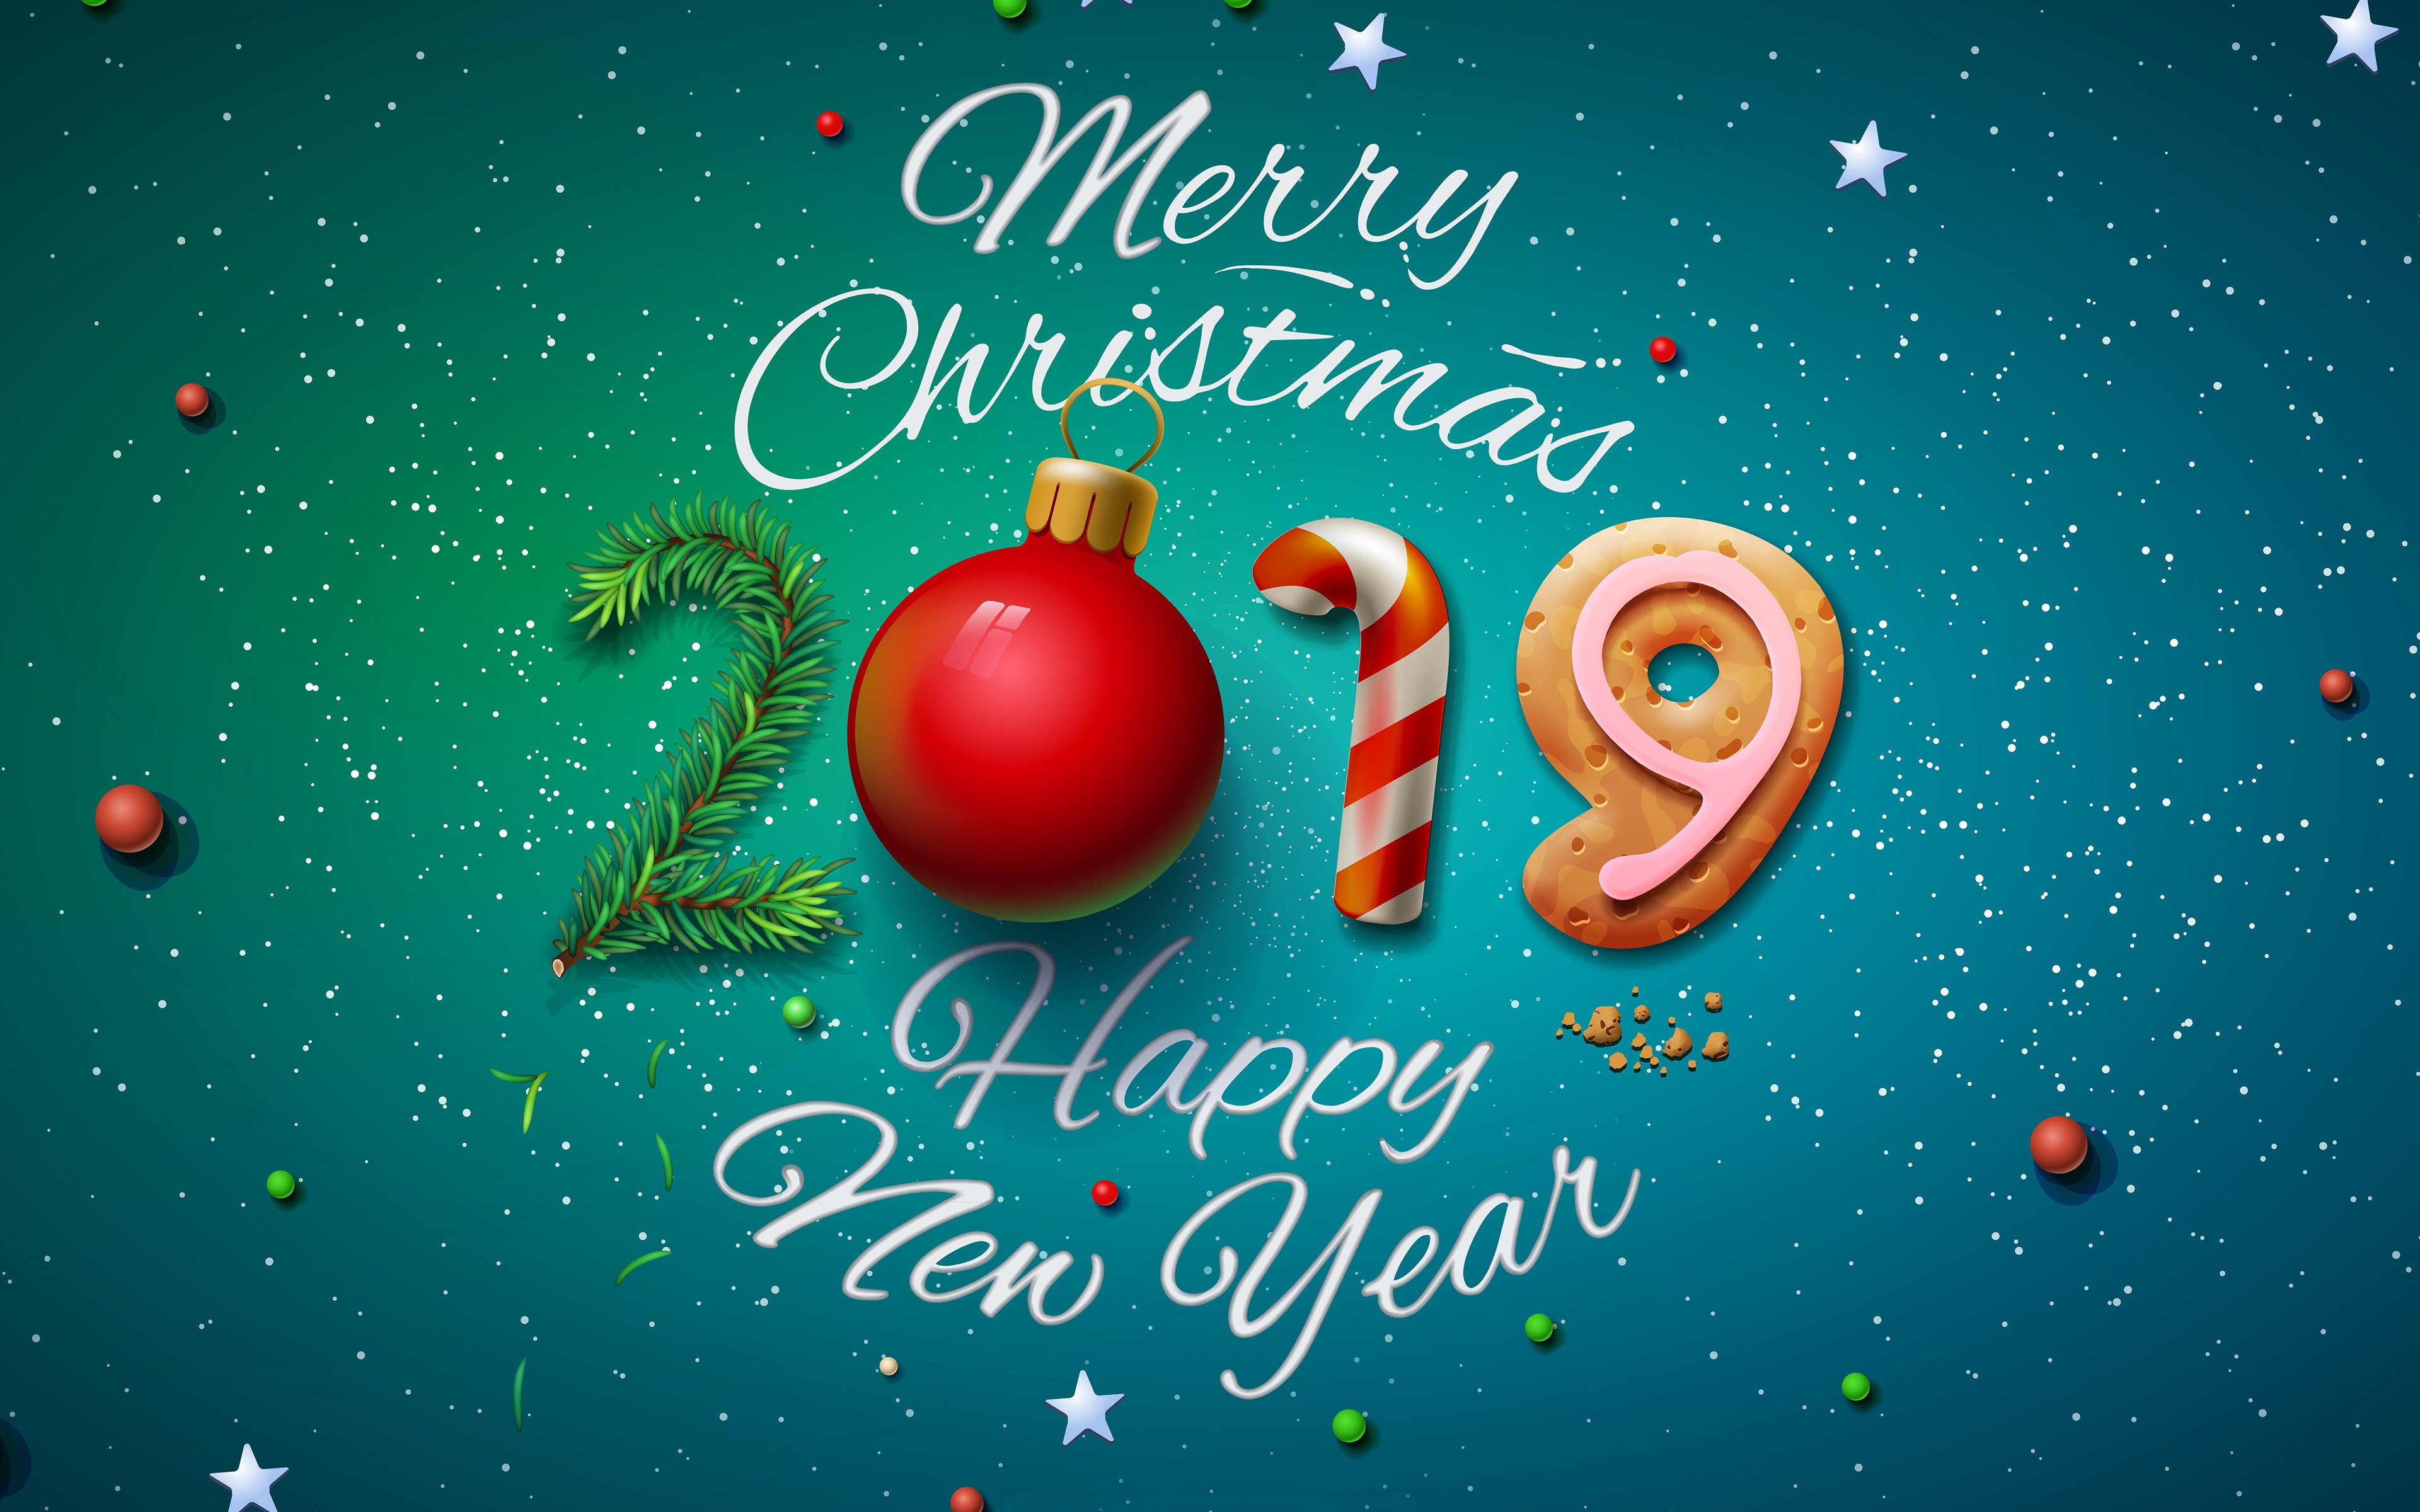 merry christmas happy new year 2019